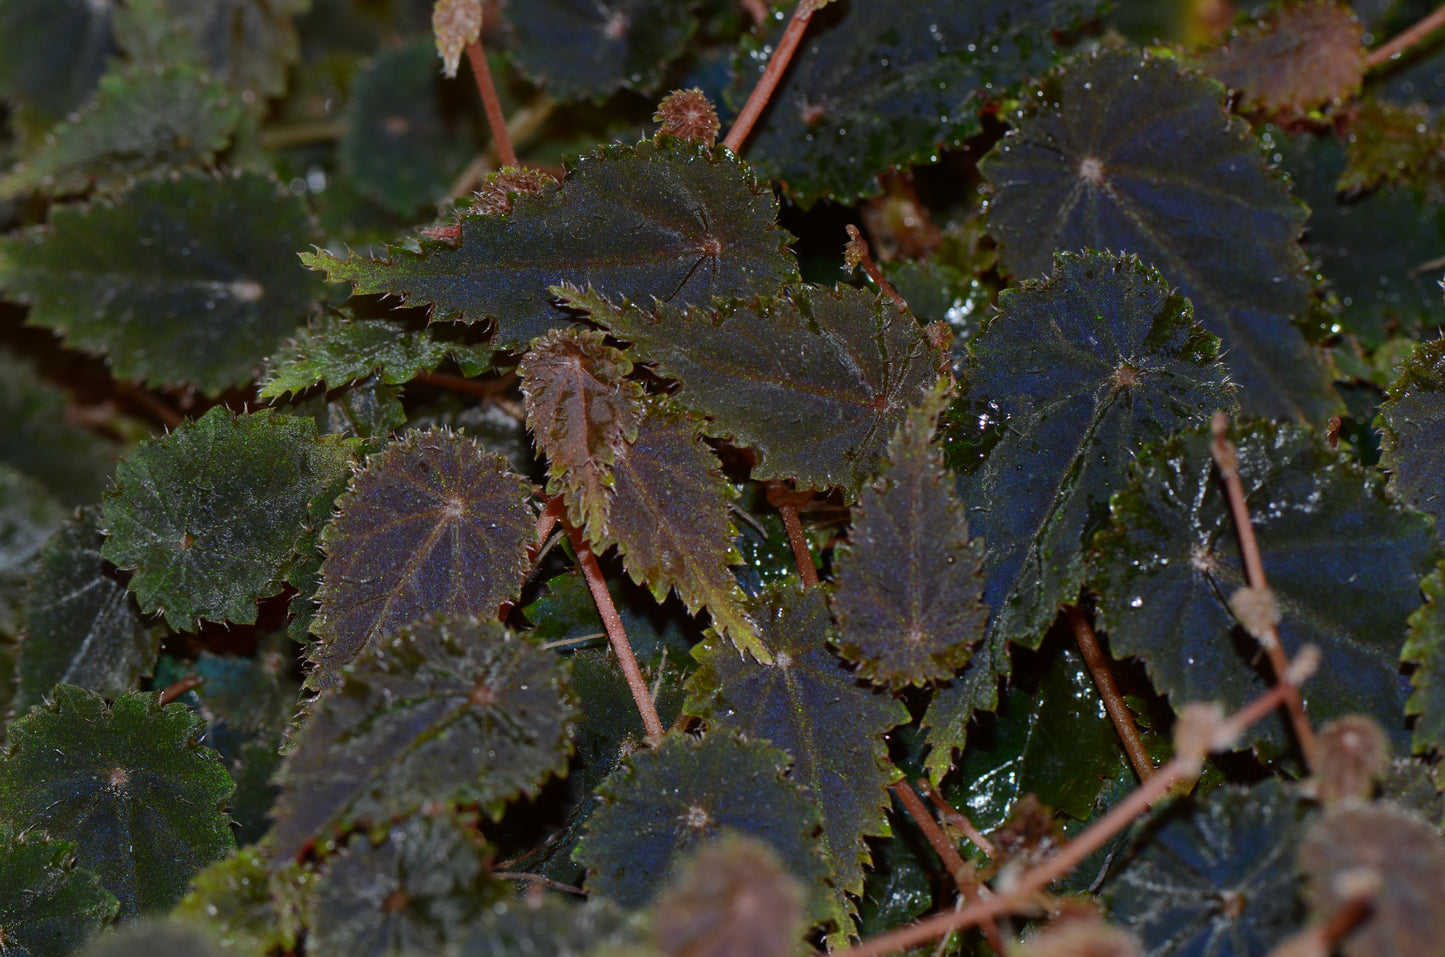 Begonia dodsonii "Crispa"